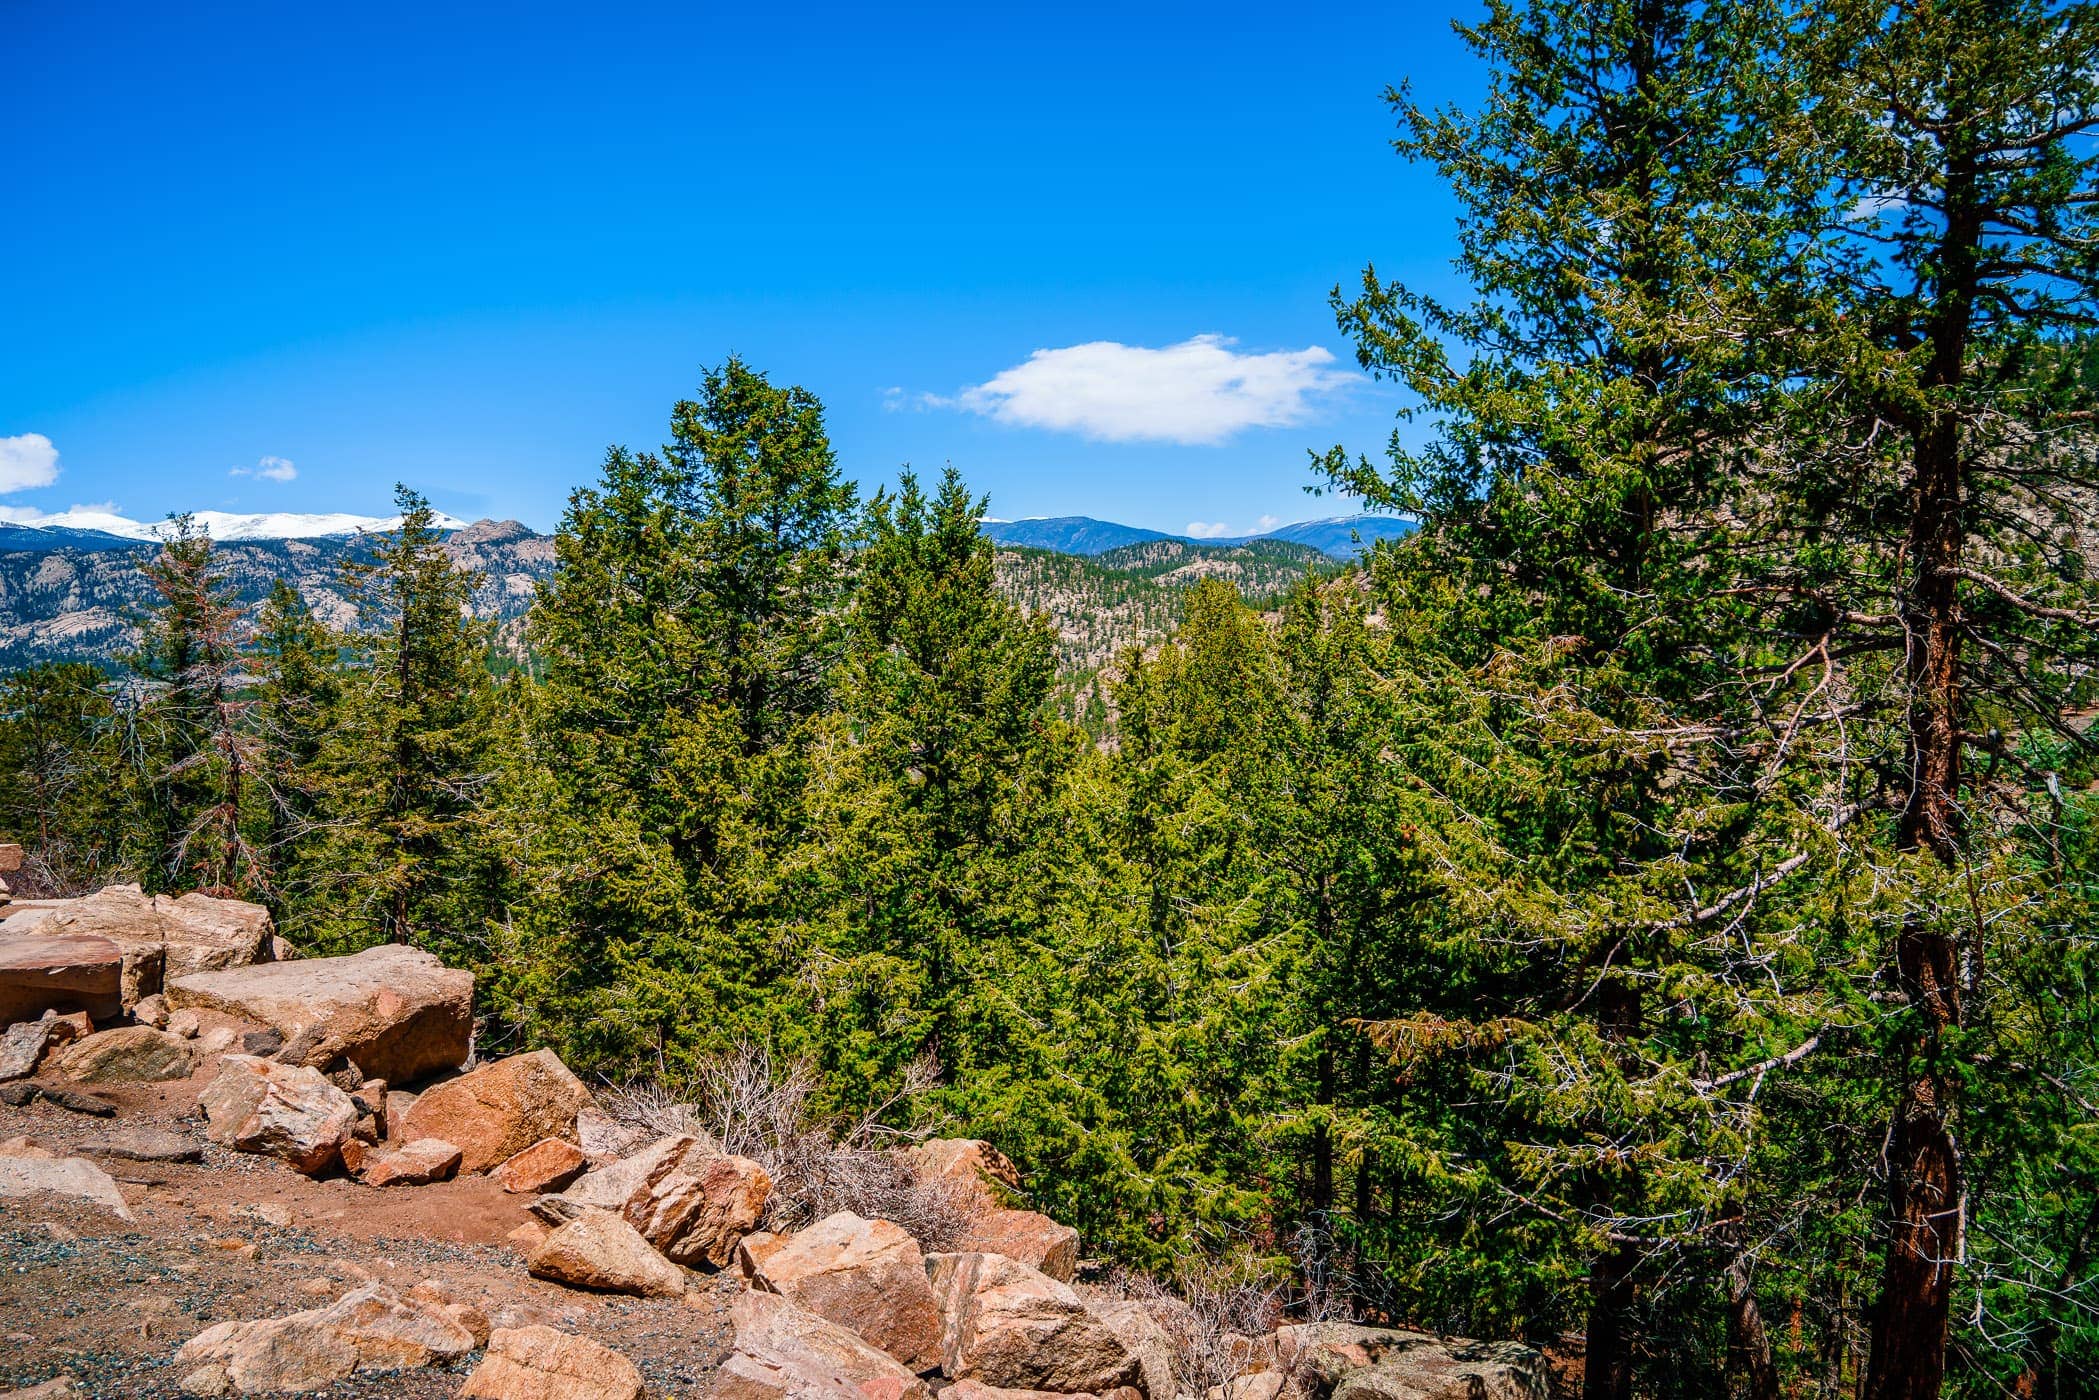 A view of the Rocky Mountains from an overlook near Estes Park, Colorado.